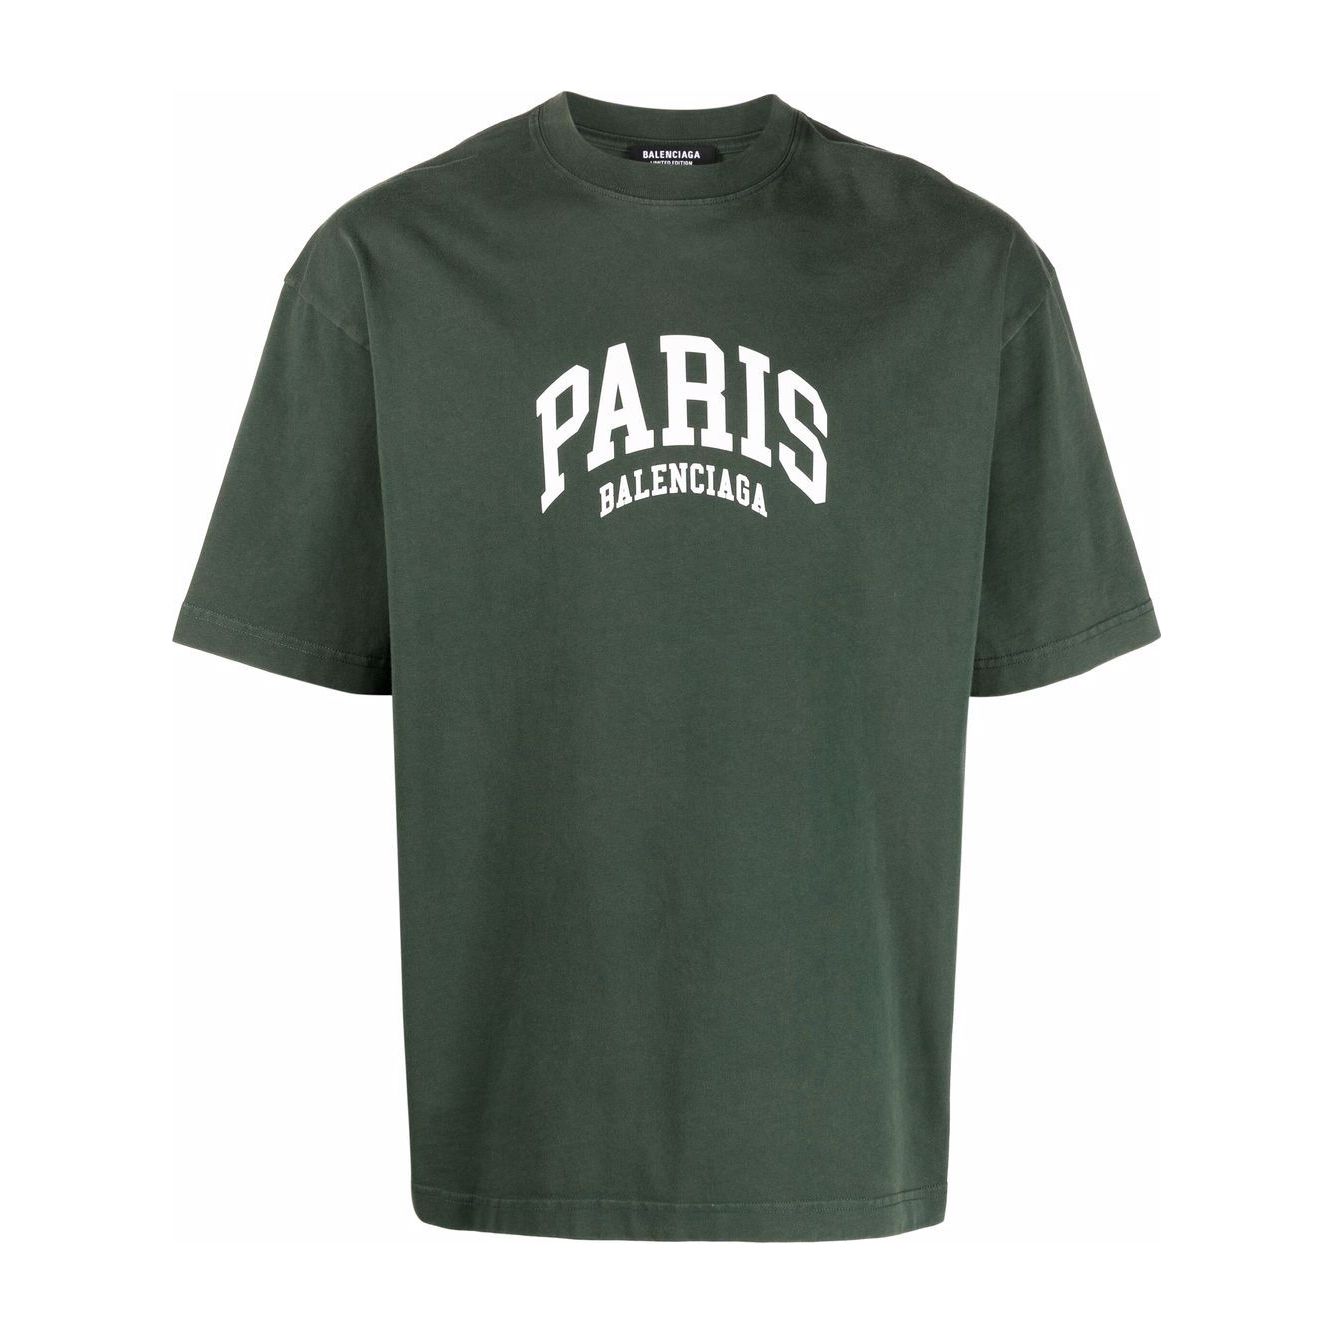 Balenciaga - Paris Vintage Jersey (Dark Green)